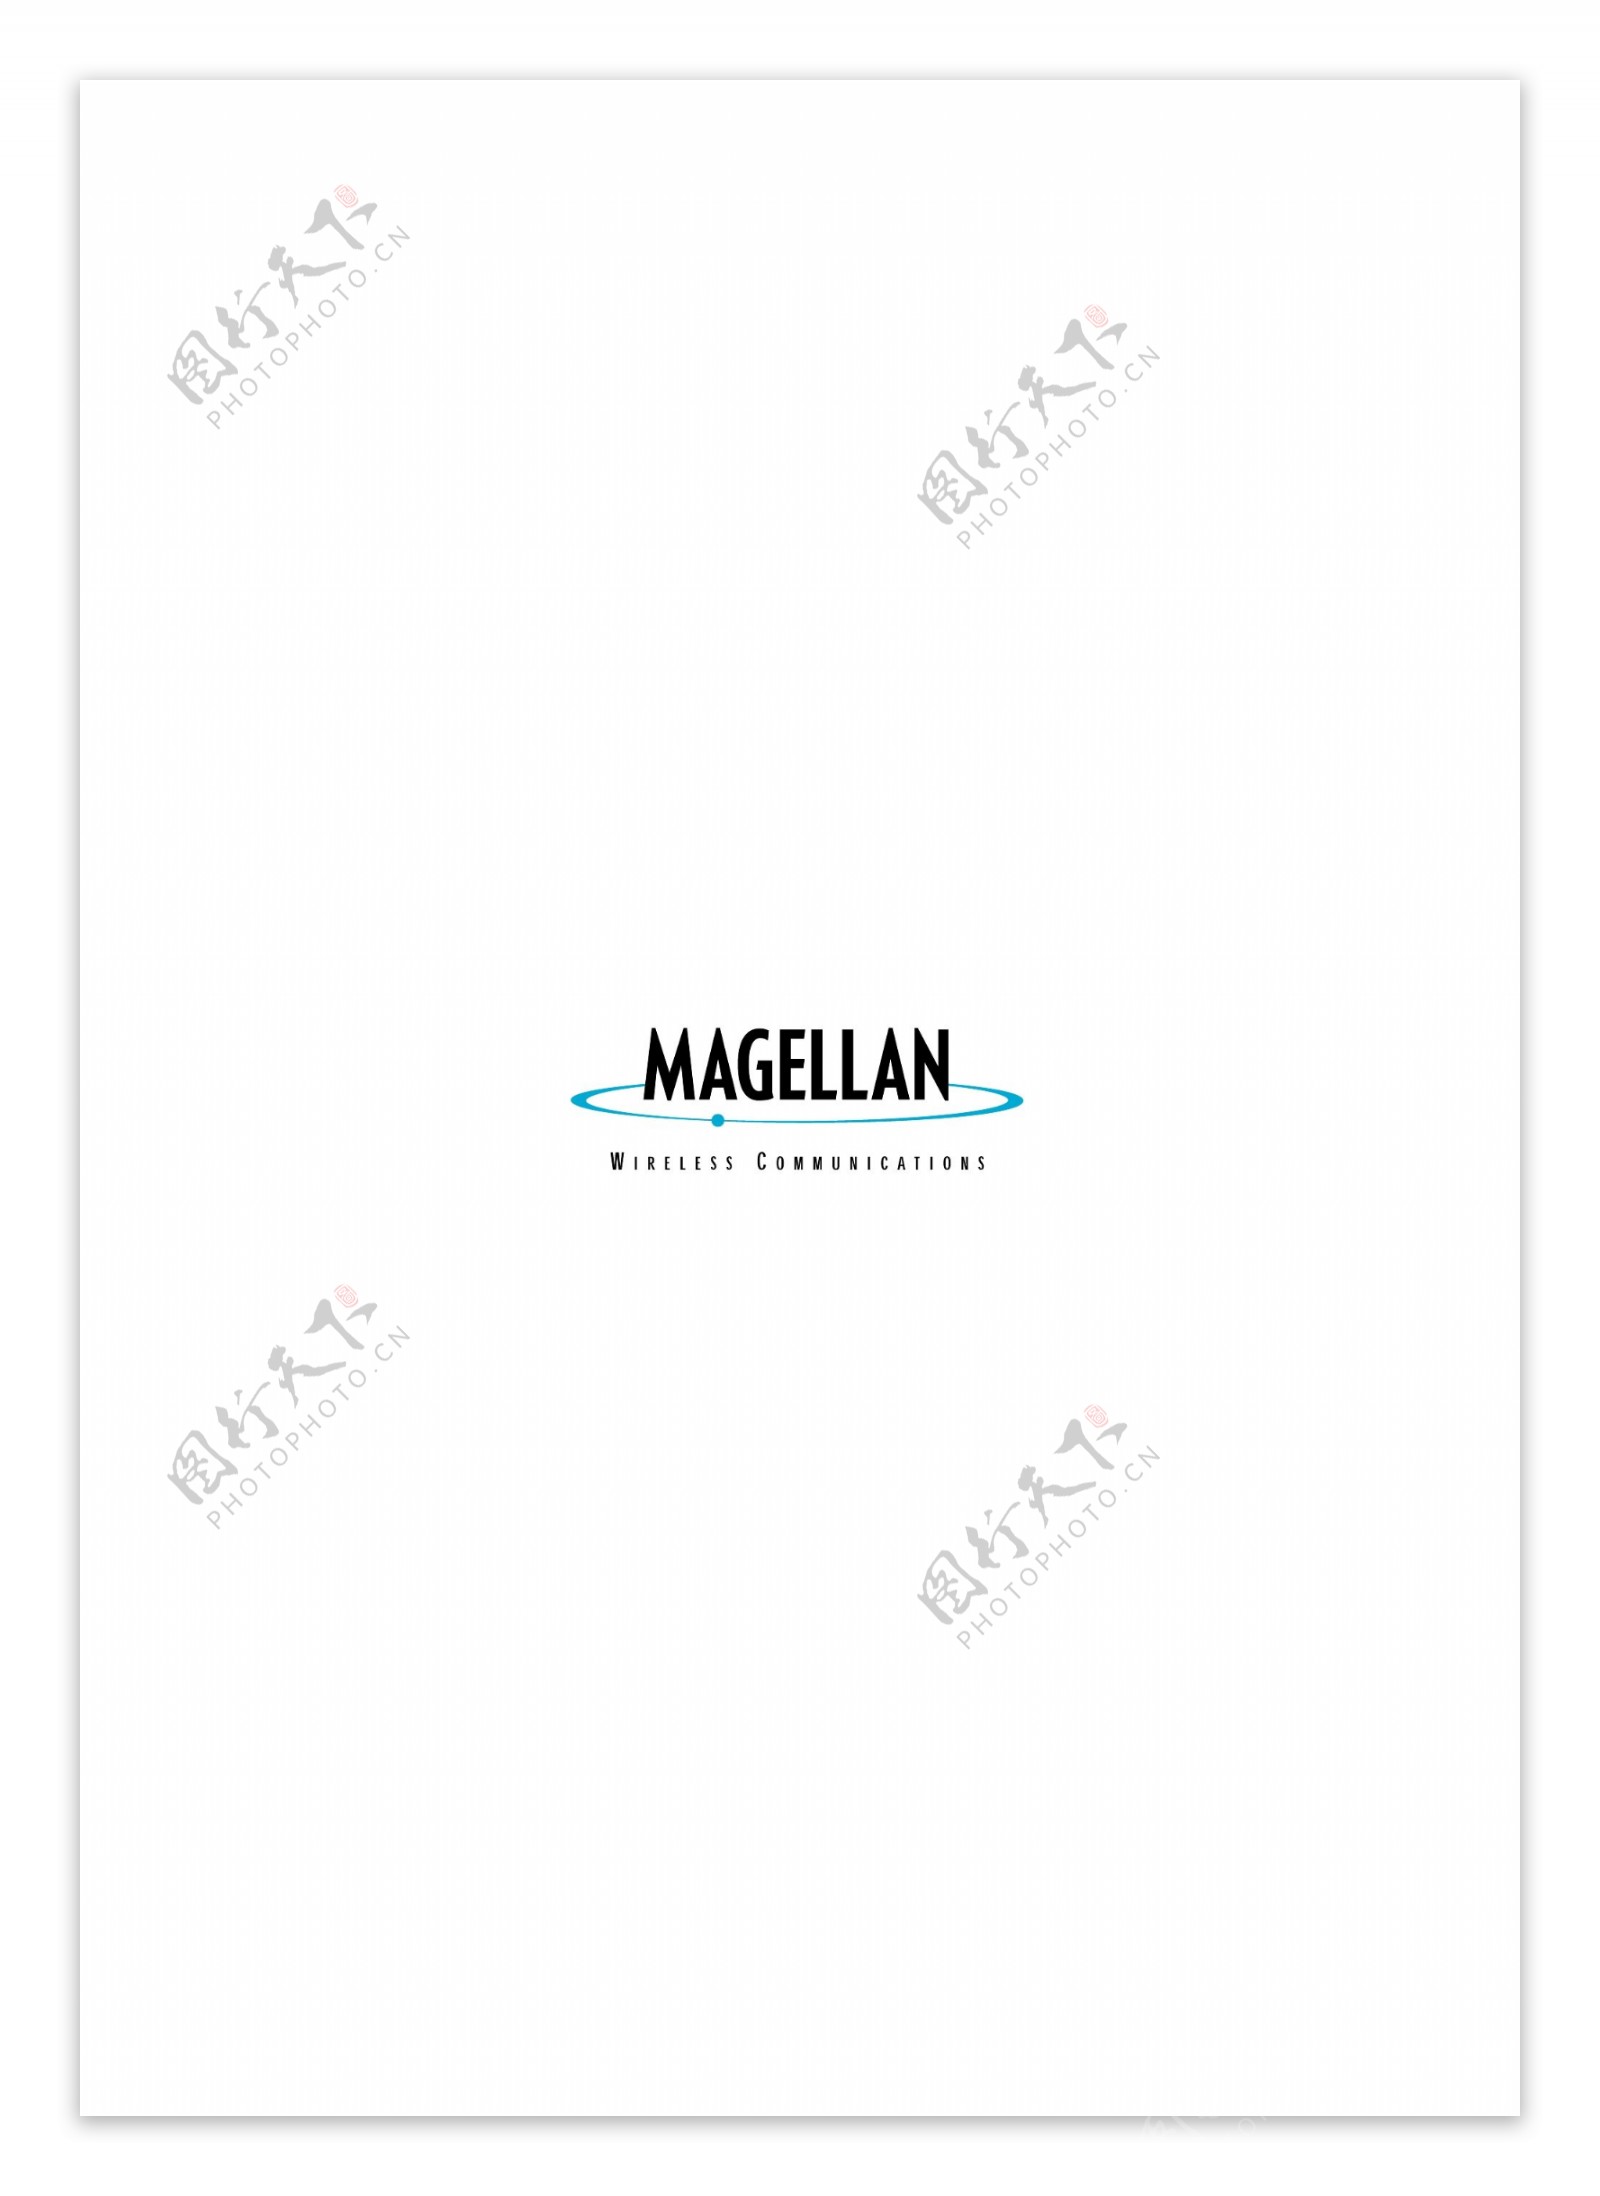 Magellanlogo设计欣赏Magellan手机公司LOGO下载标志设计欣赏